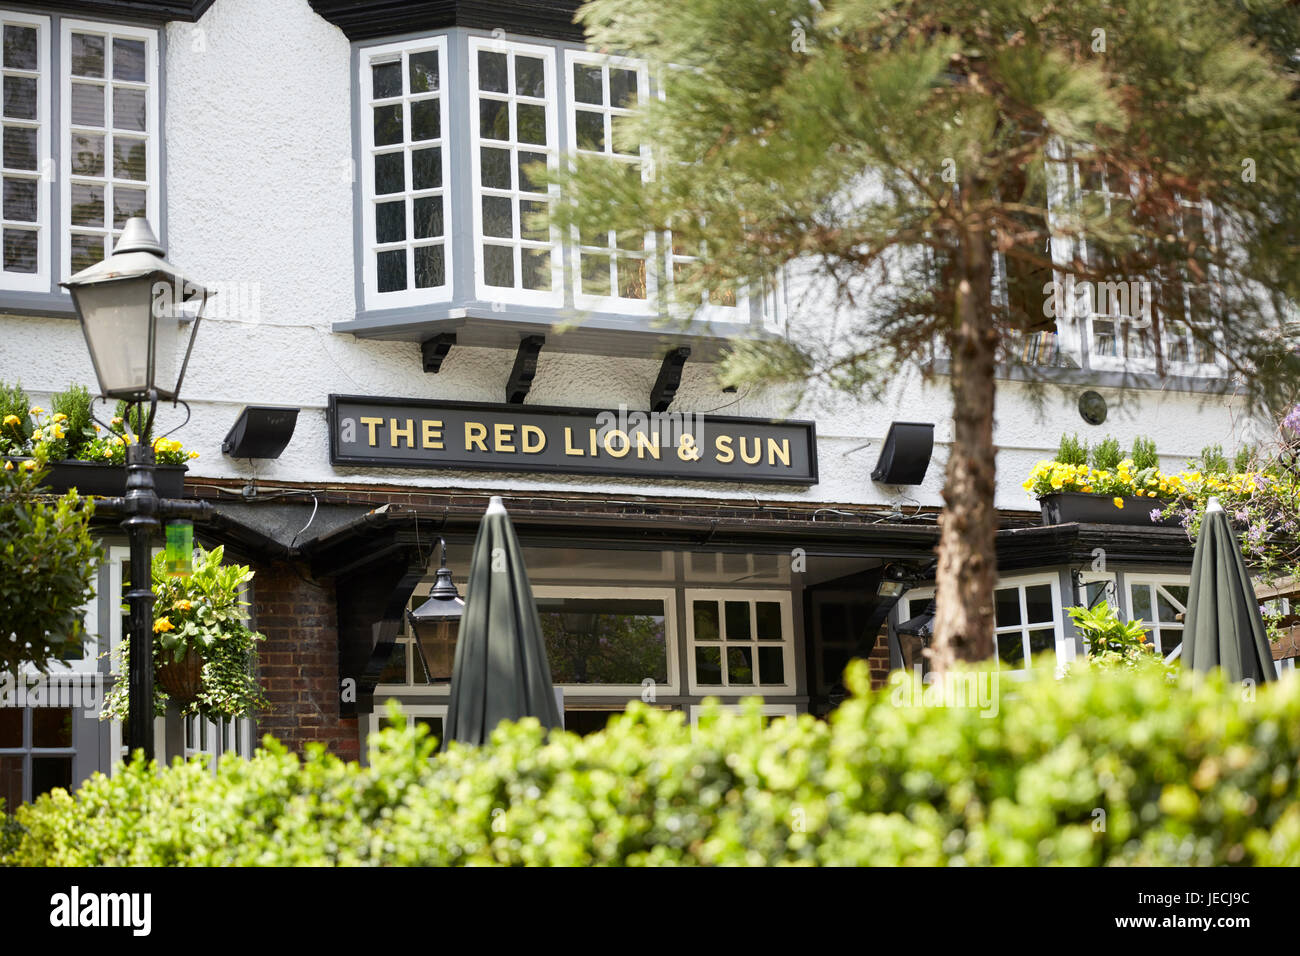 Red Lion & London, UK Stock Photo Alamy